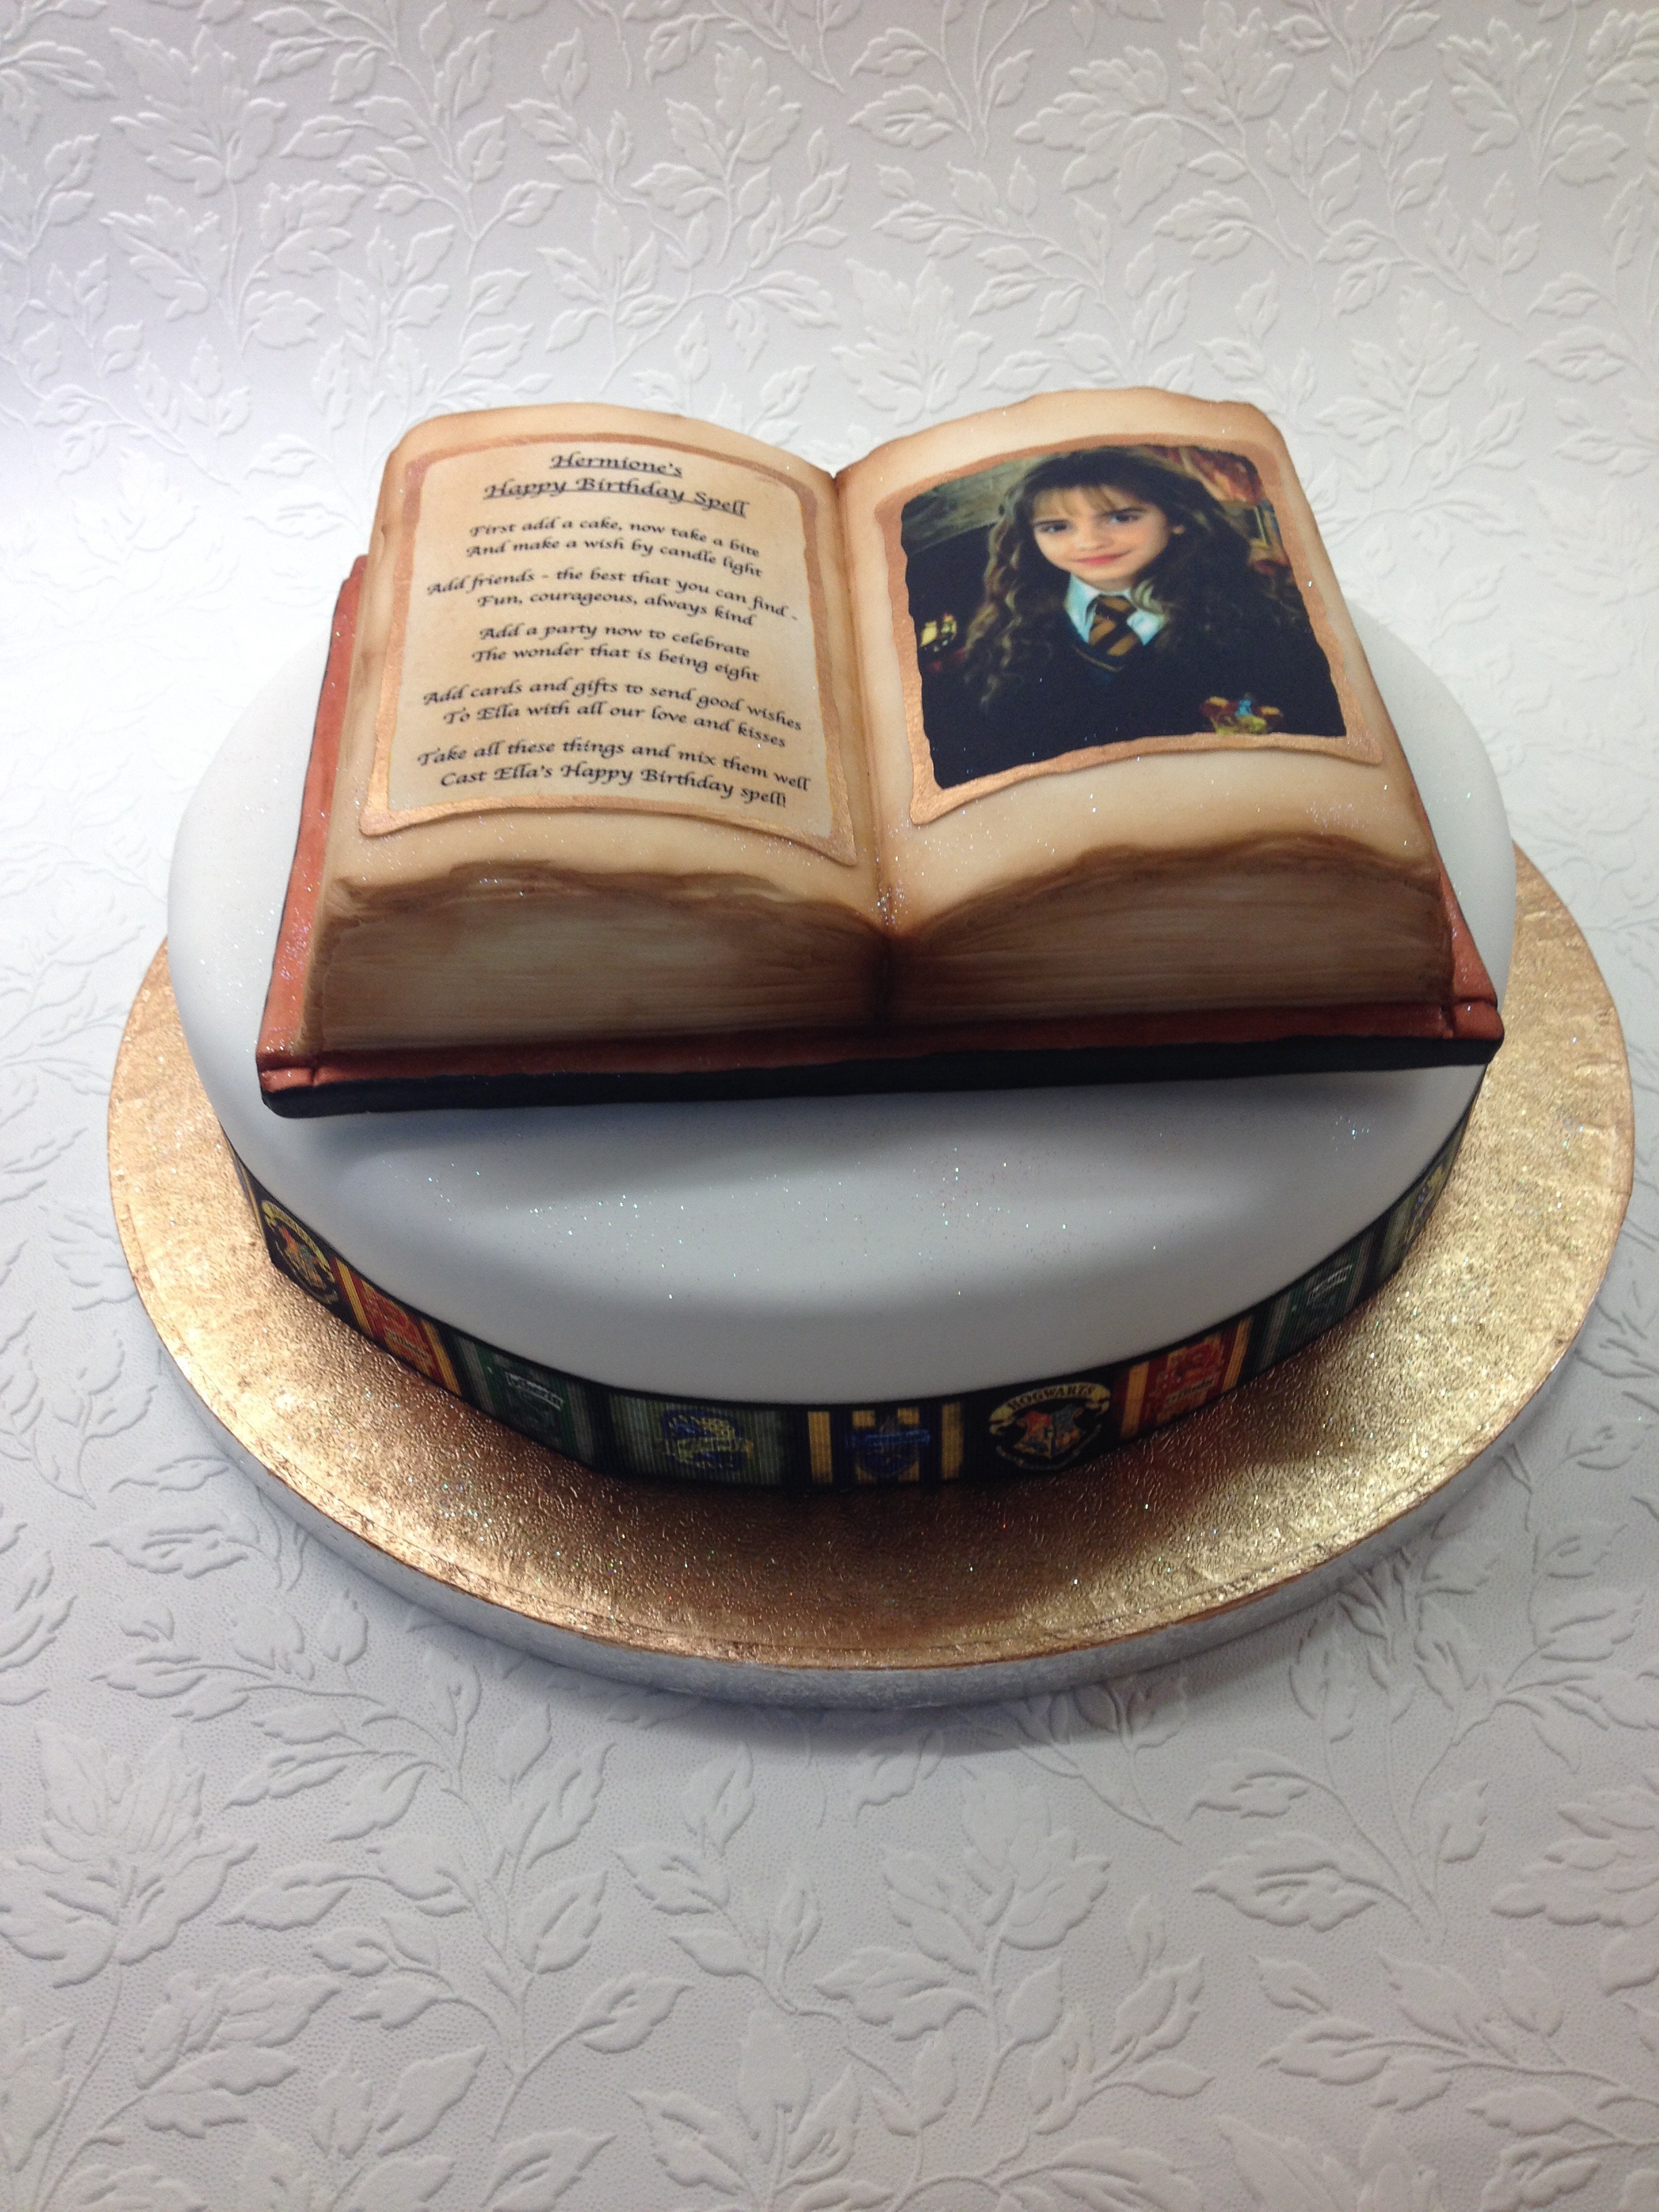 decorated book cake